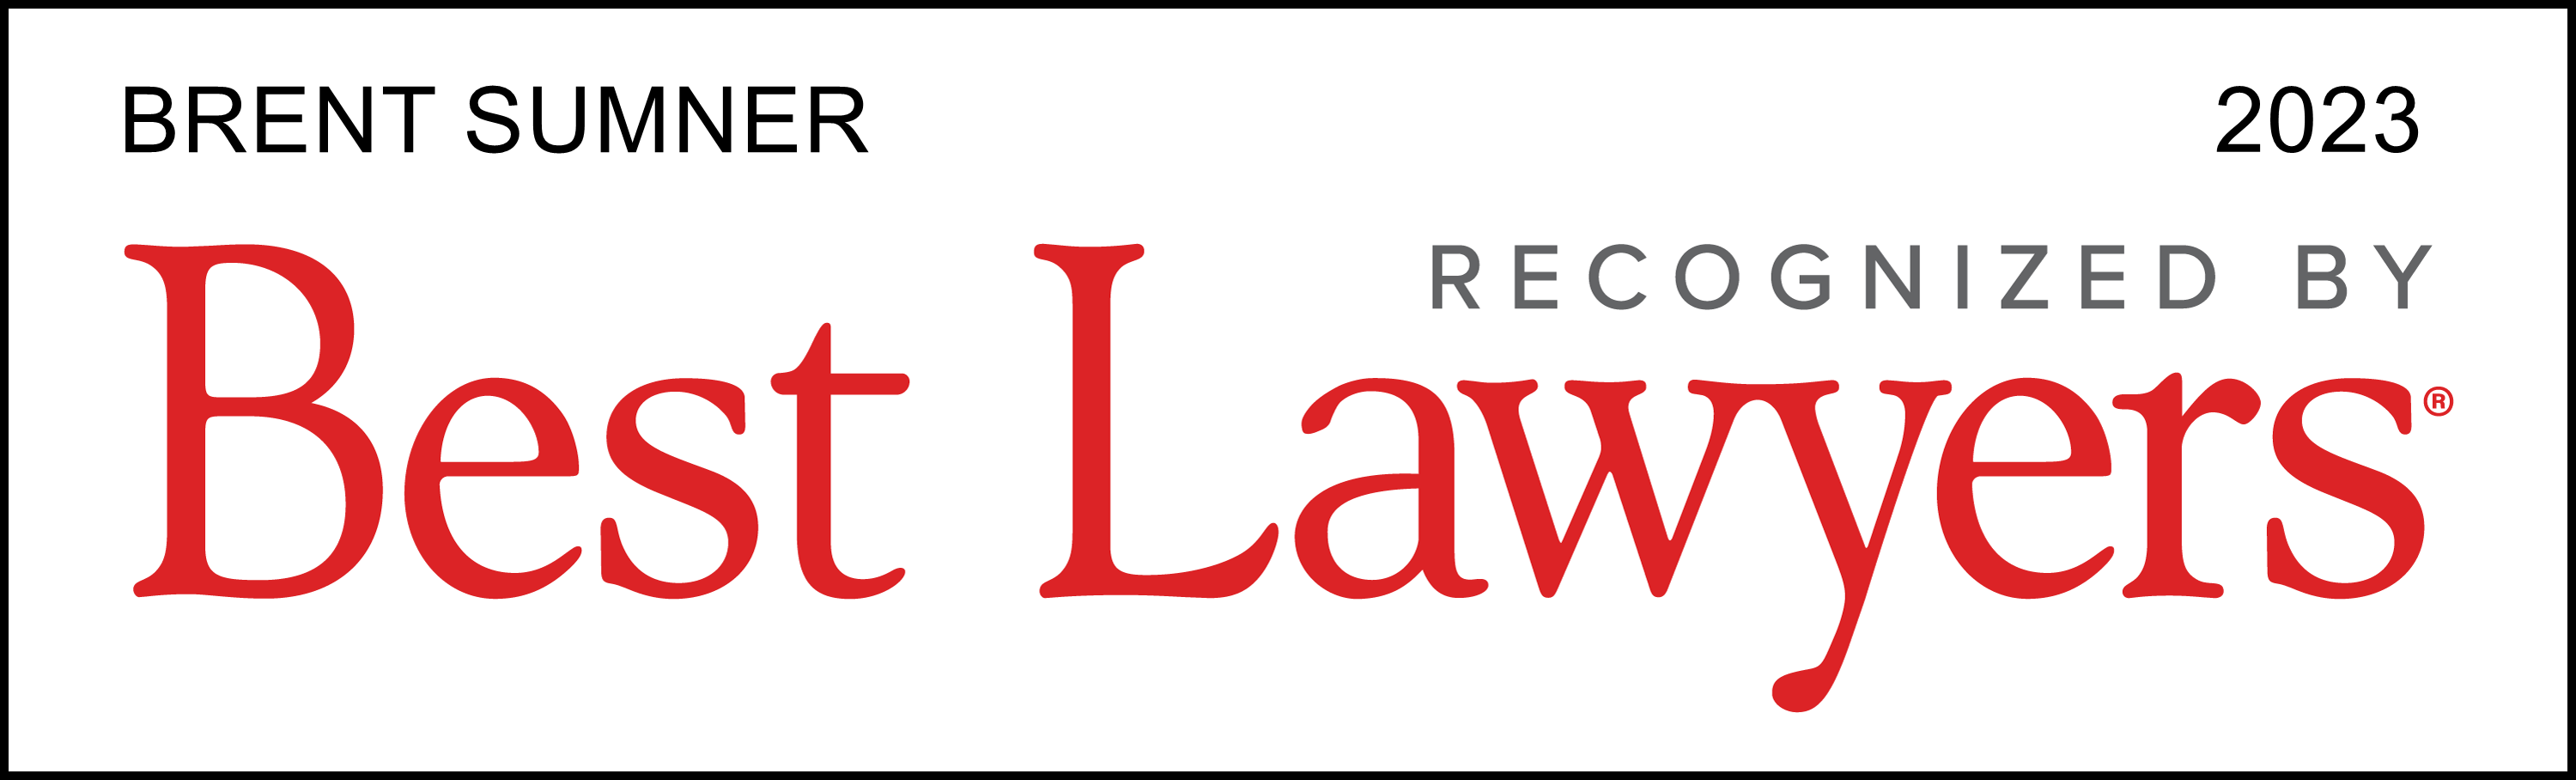 Brent Sumner awarded Best Lawyers Award in 2023